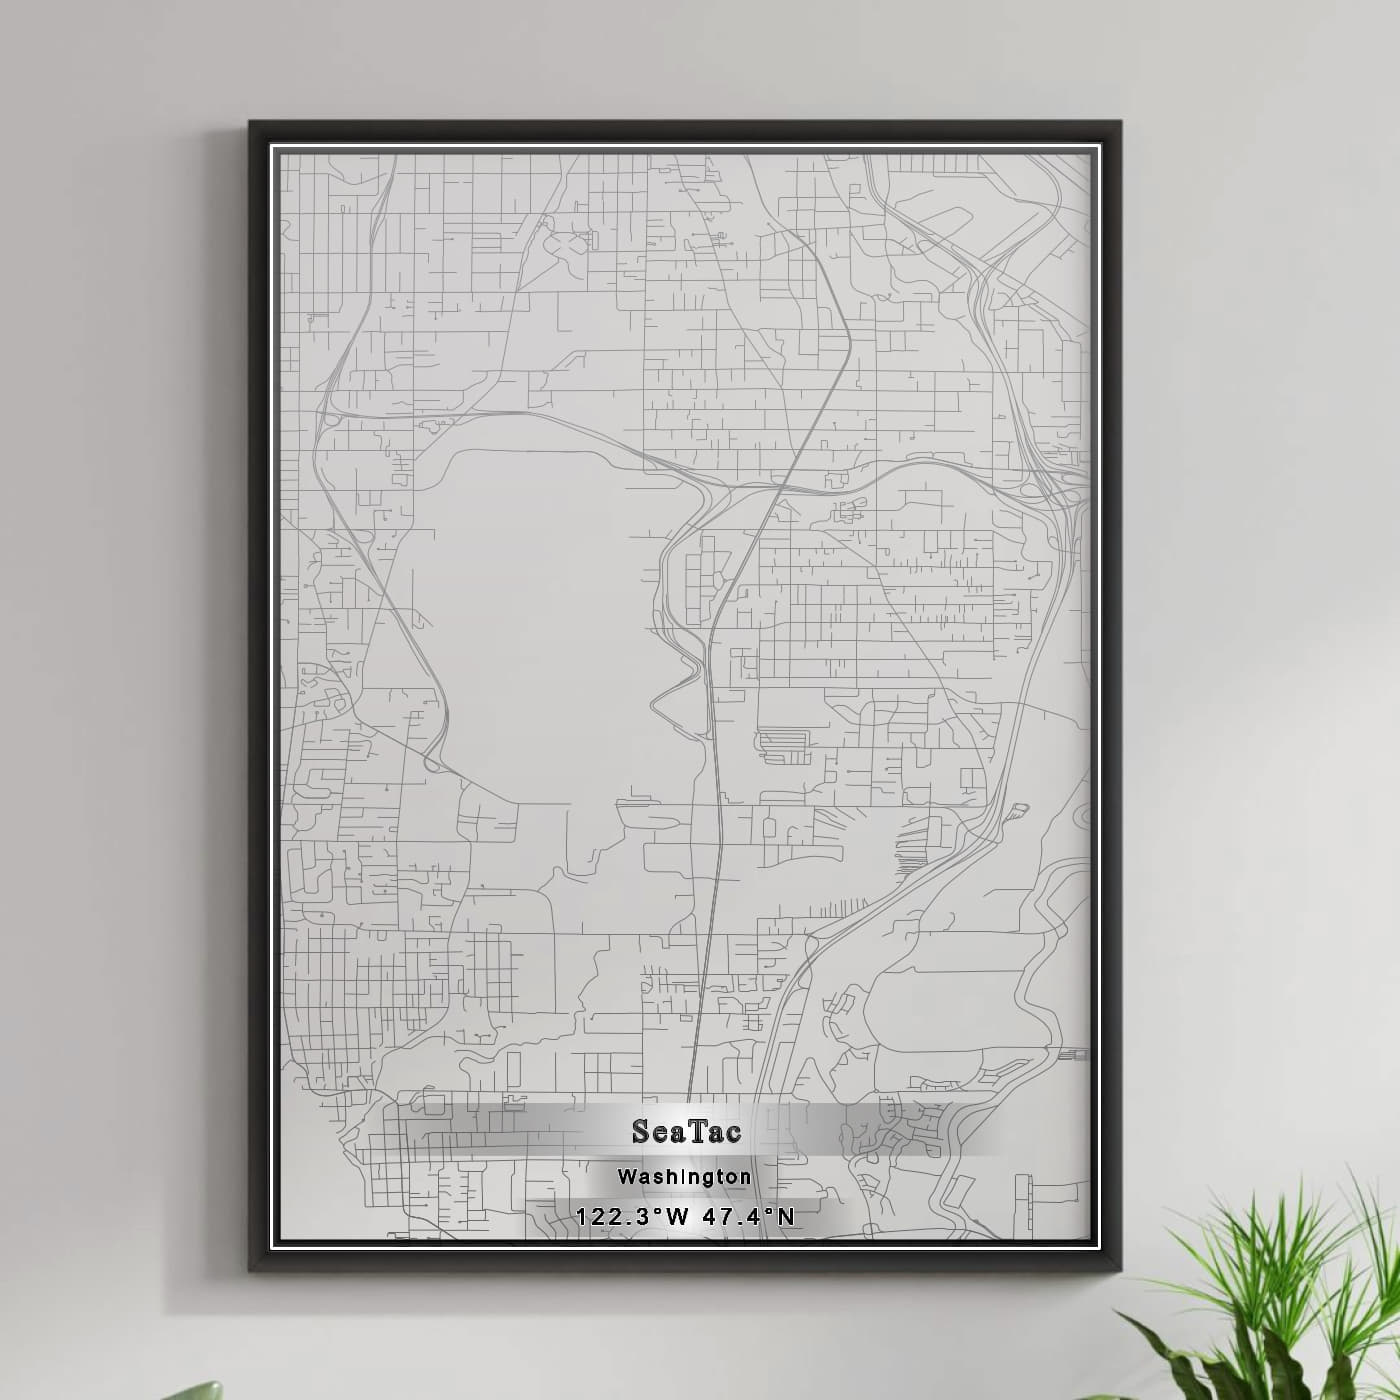 ROAD MAP OF SEATAC, WASHINGTON BY MAPBAKES